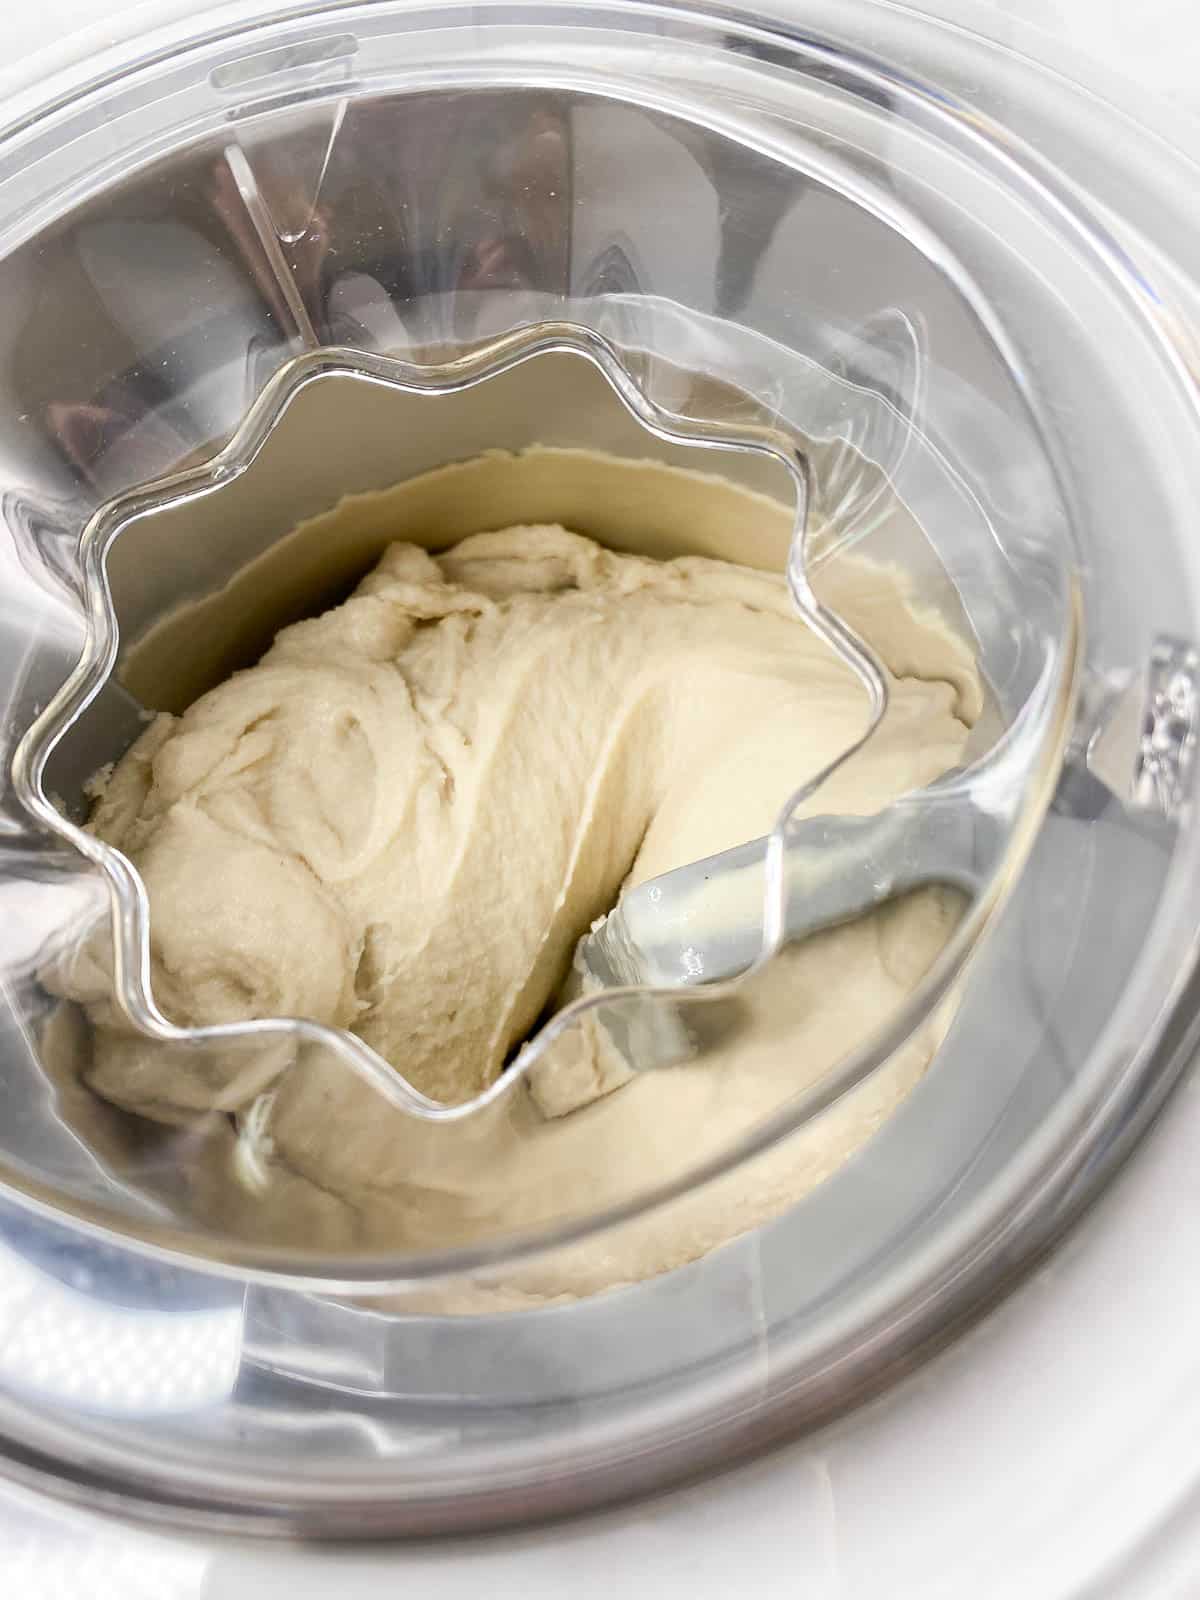 Churned ice cream in ice cream maker.